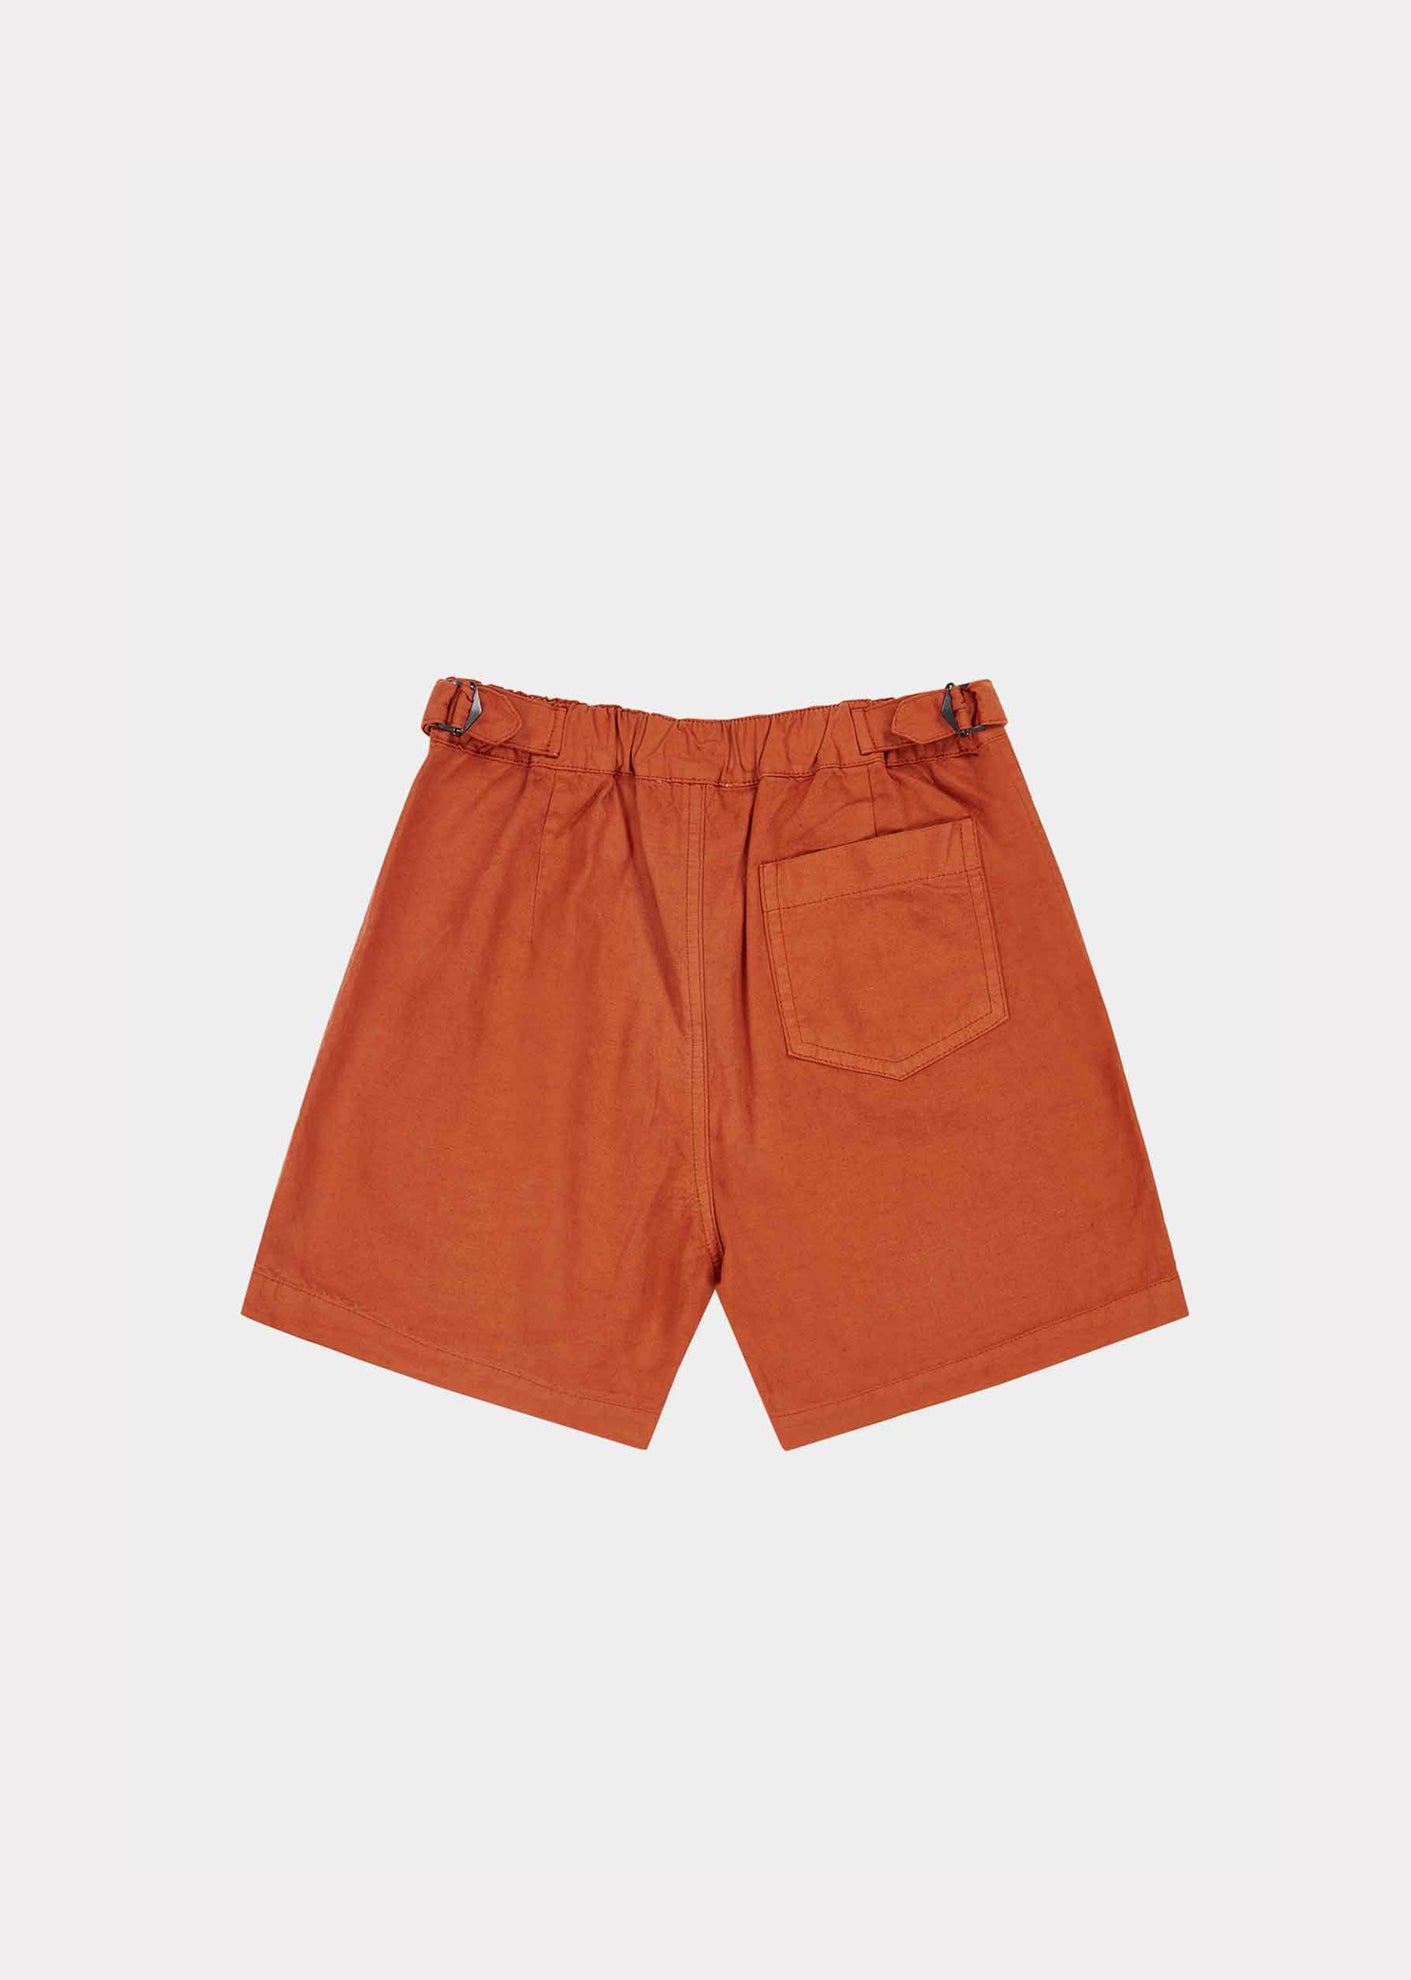 arum shorts - orange